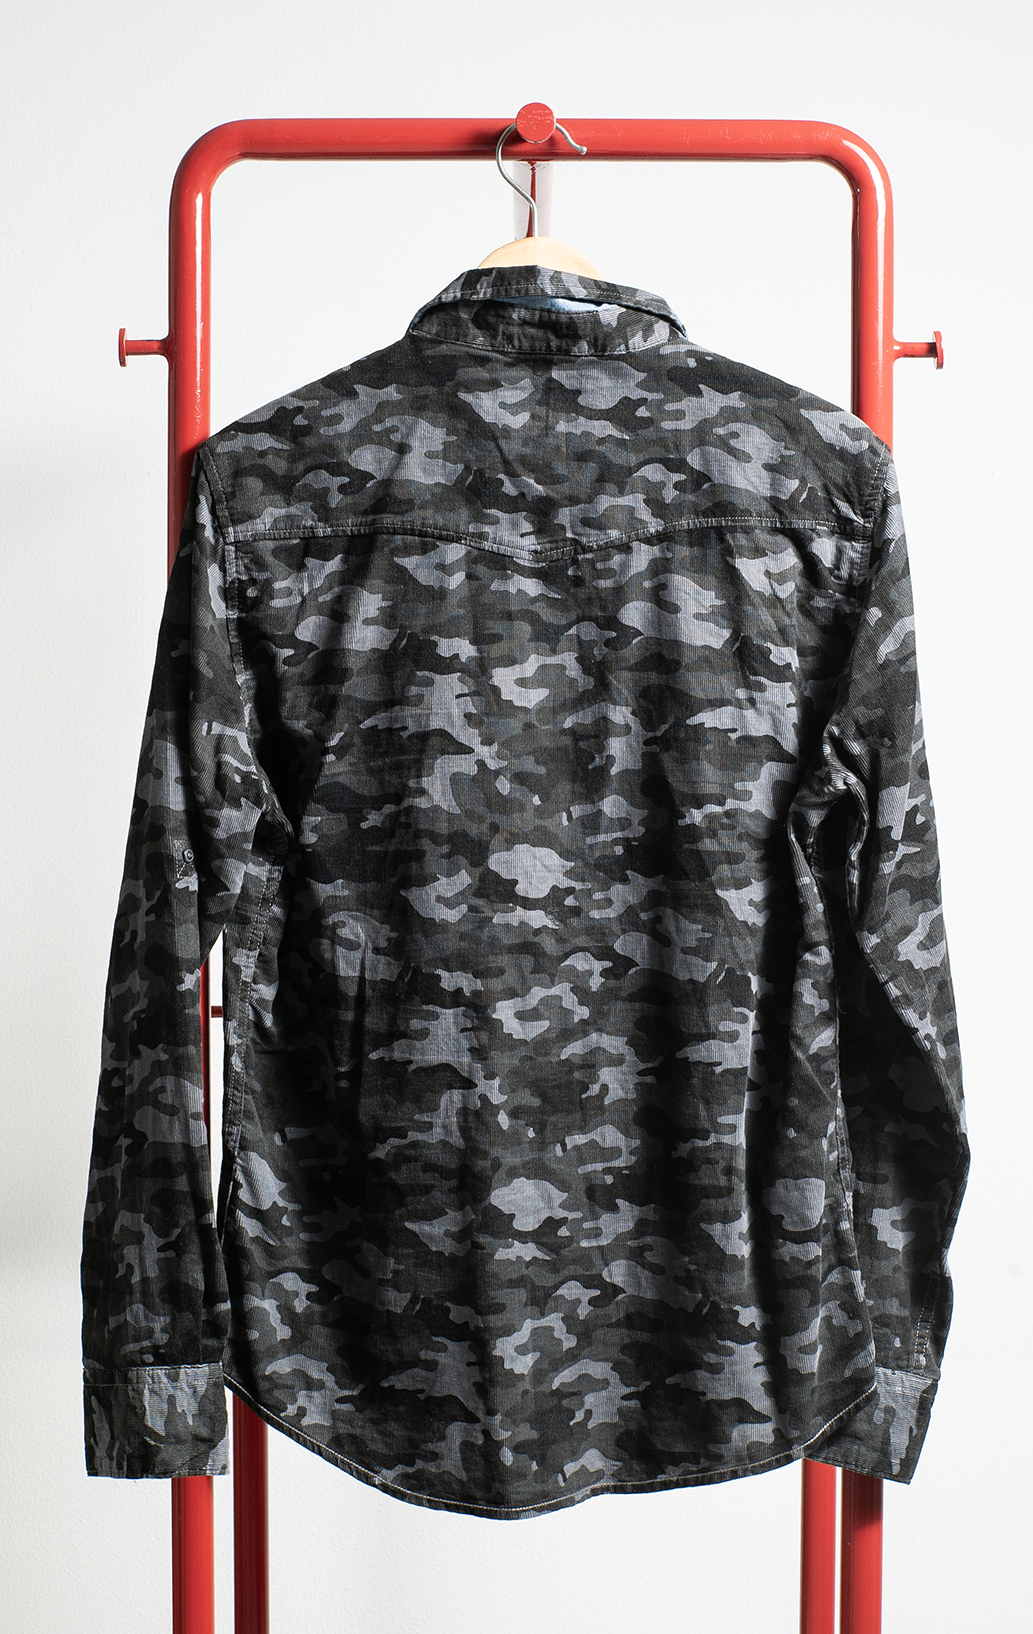 MEN THE ALCOTT & CO SHIRT - Camouflage black & grey - Medium